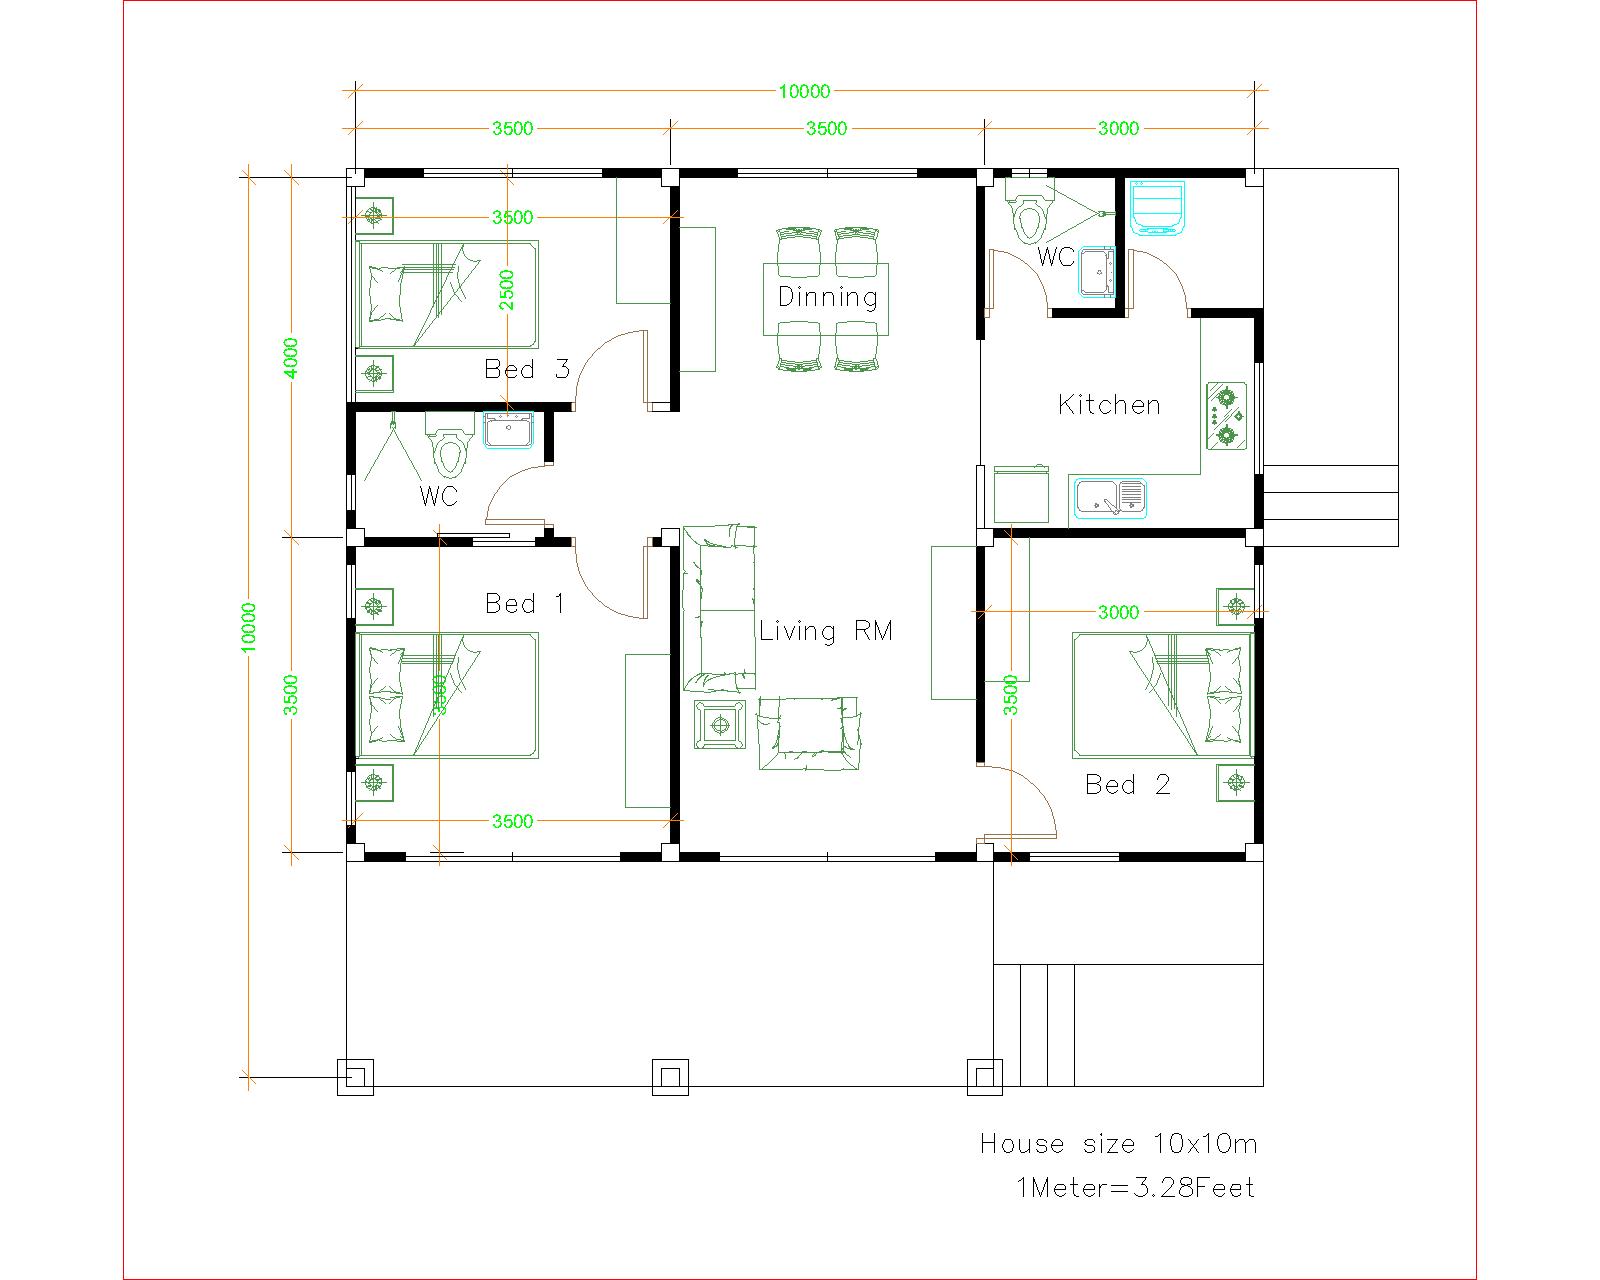 House Design 10x10 with 3 Bedrooms full interior floor plan